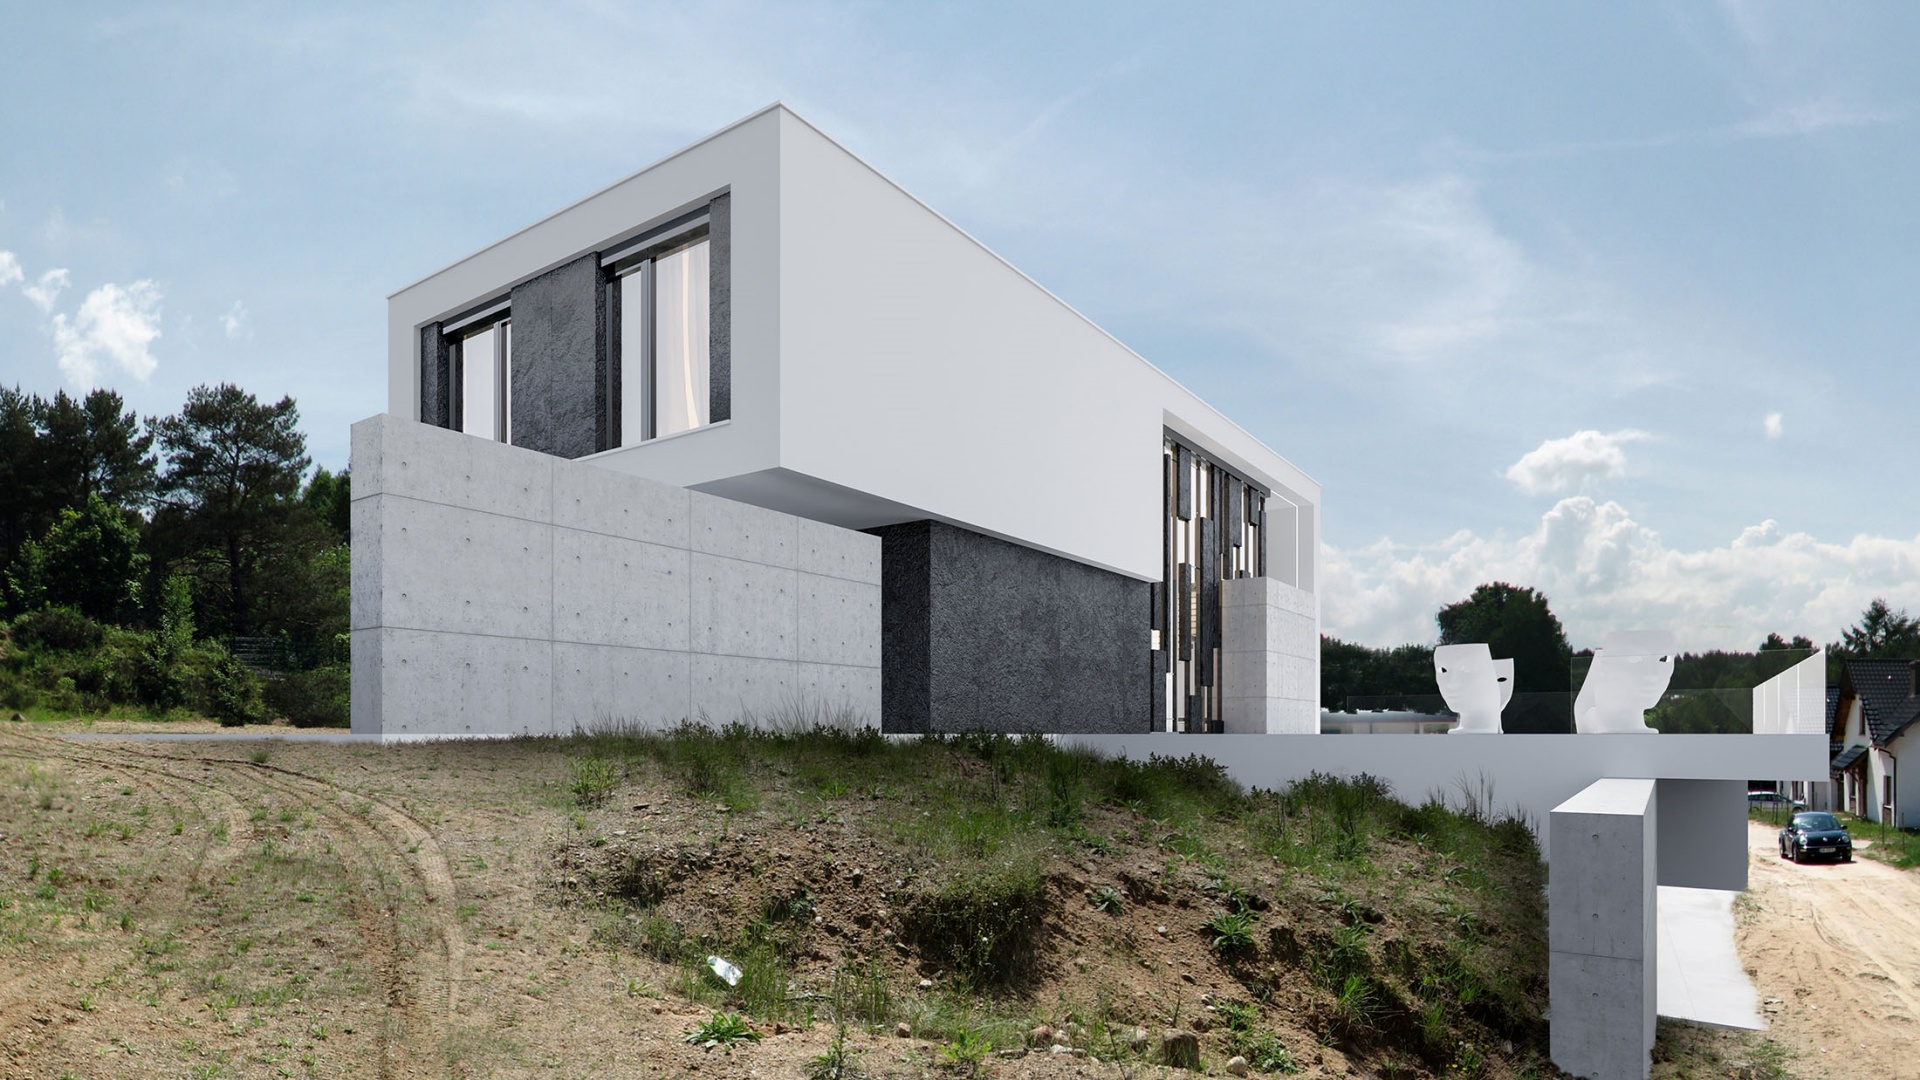 RE: HOUSE ON THE SAND projektu architekta Marcina Tomaszewskiego REFORM Architekt